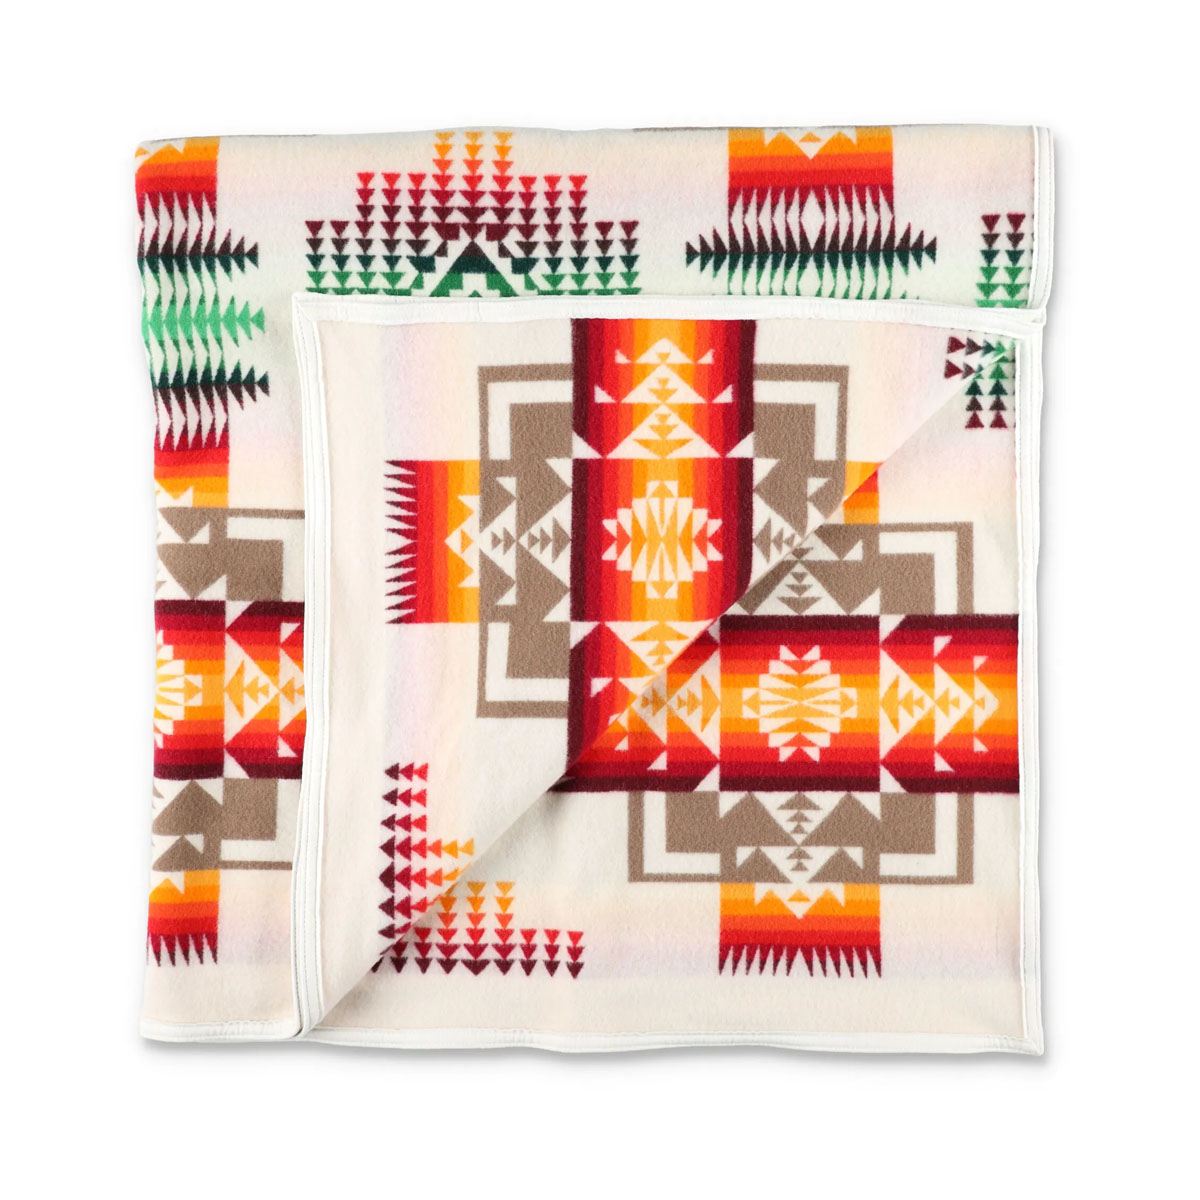 Pendleton Chief Joseph Jacquard Blanket Robe Ivory, Perfekte Decke für kühle Nächte